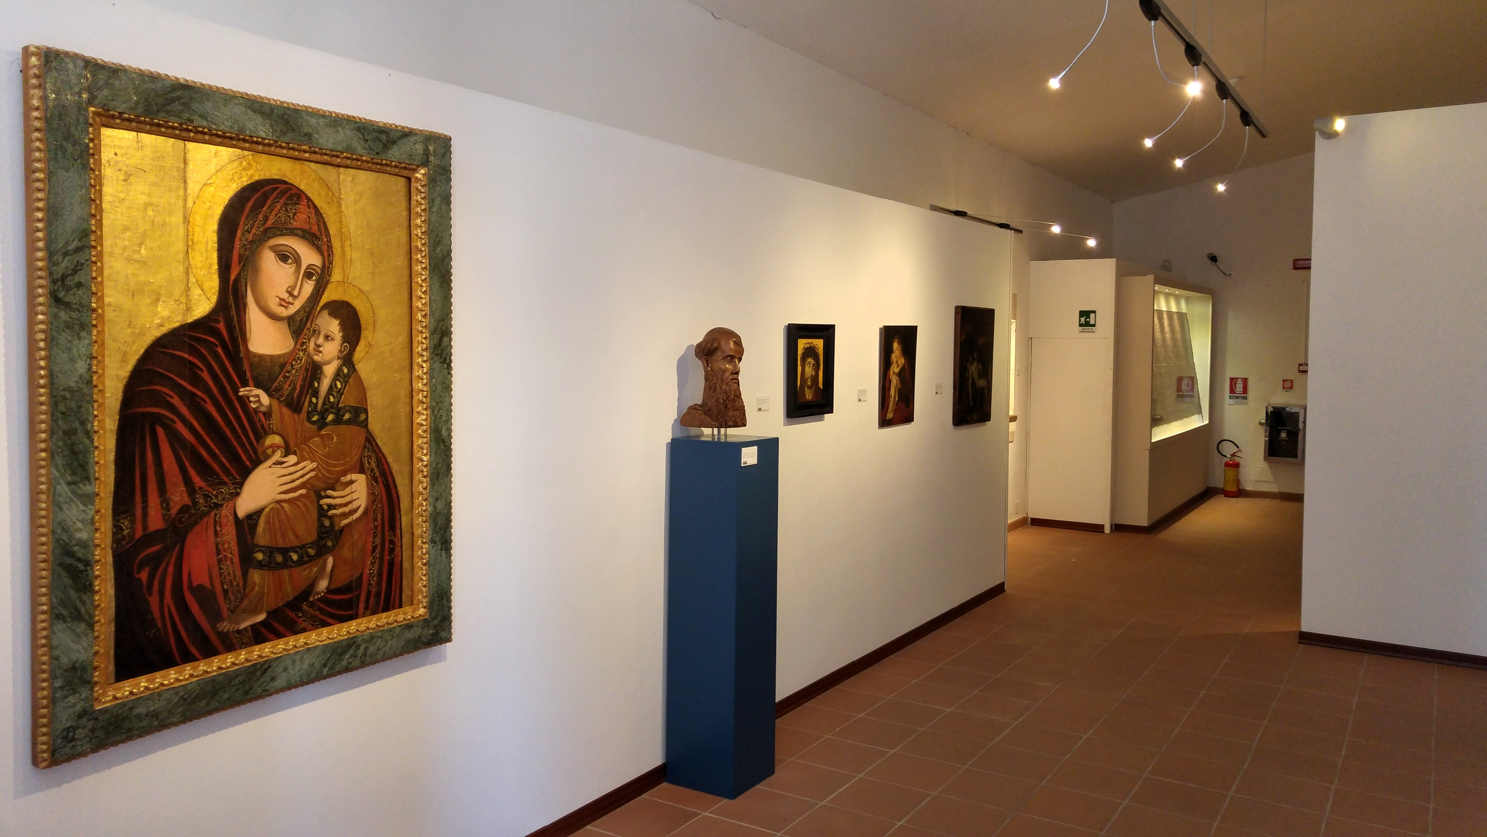 Museo Diocesano de Monreale - 1ª sala expositiva de la primera planta